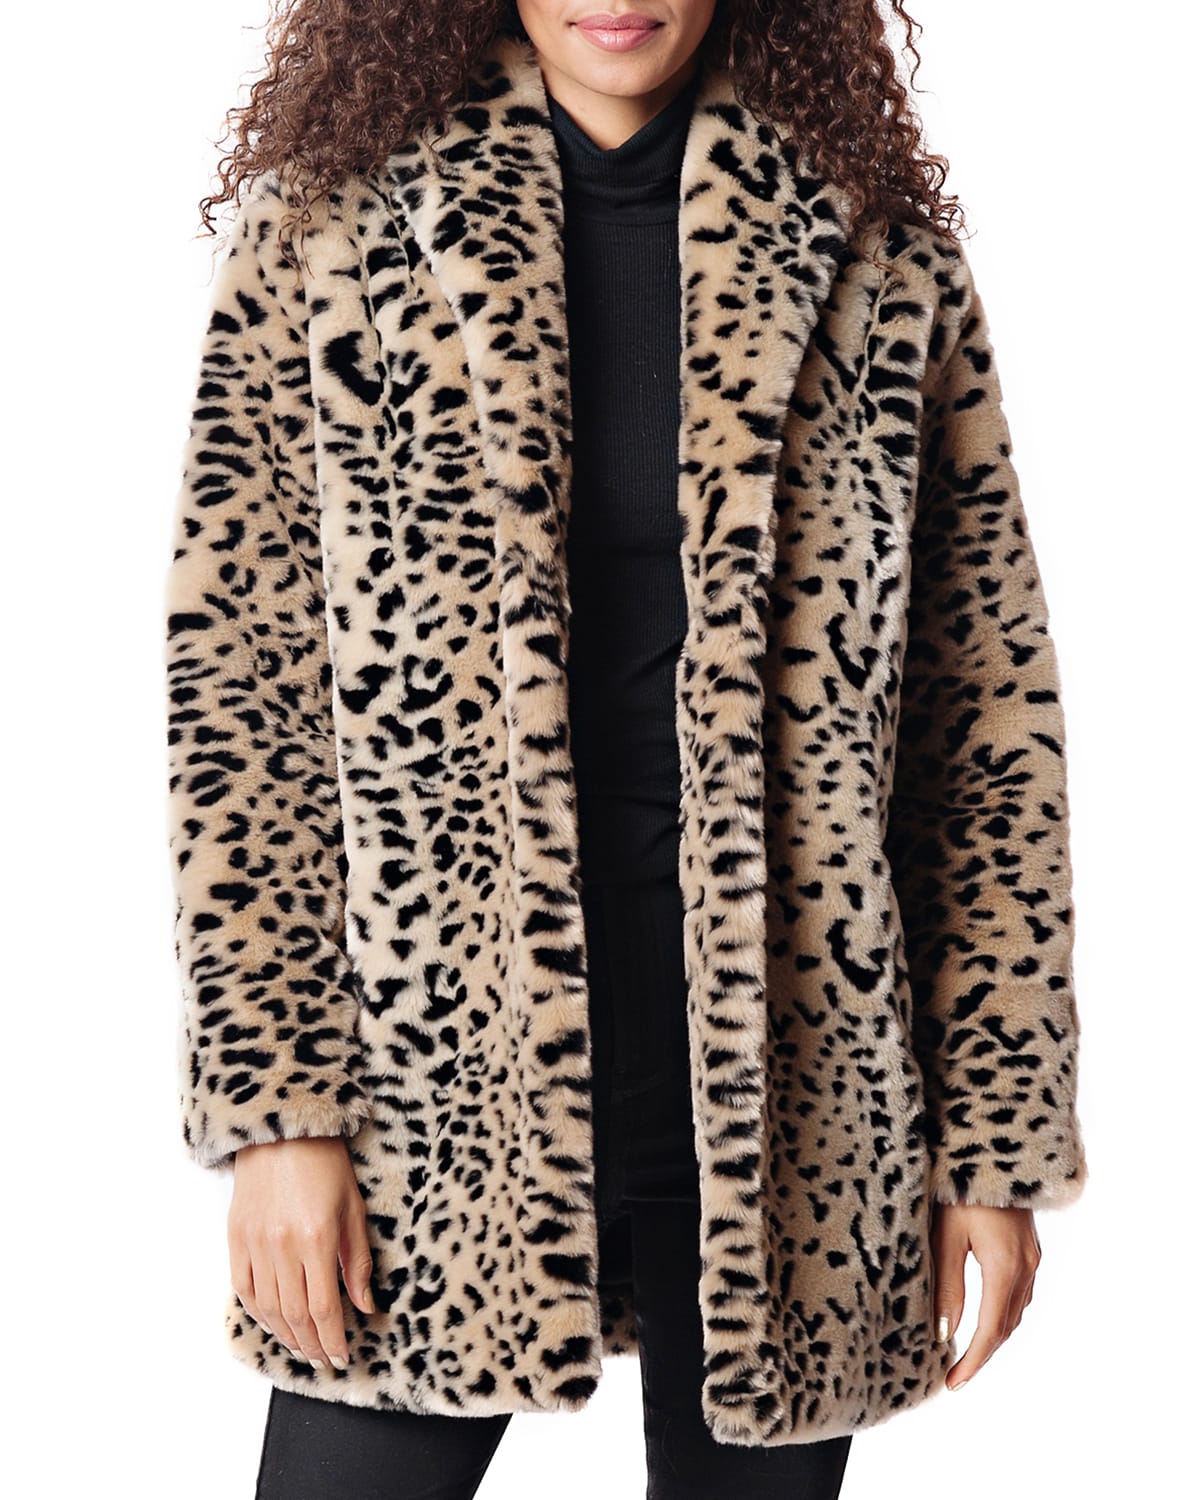 Fabulous Furs Leopard Faux Fur Shawl Jacket